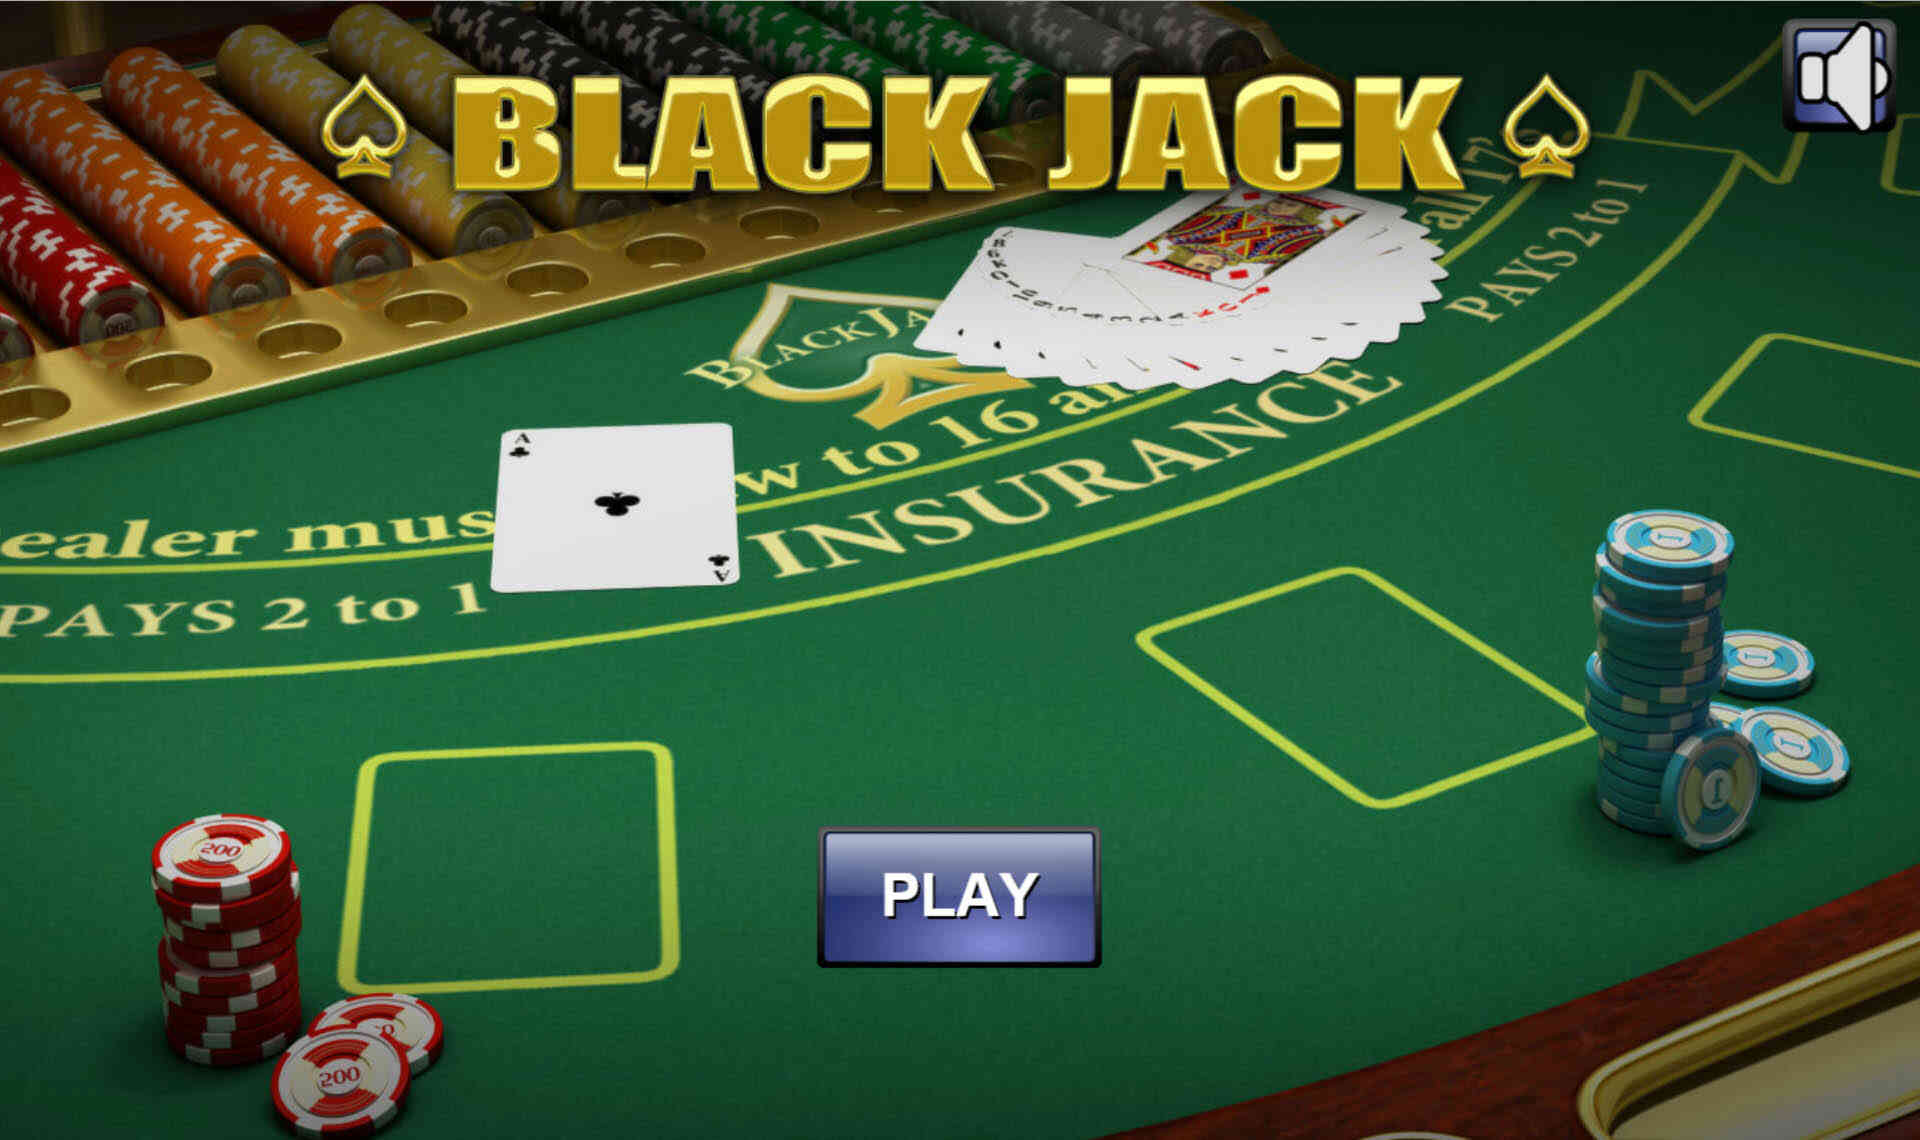 buster blackjack casino game